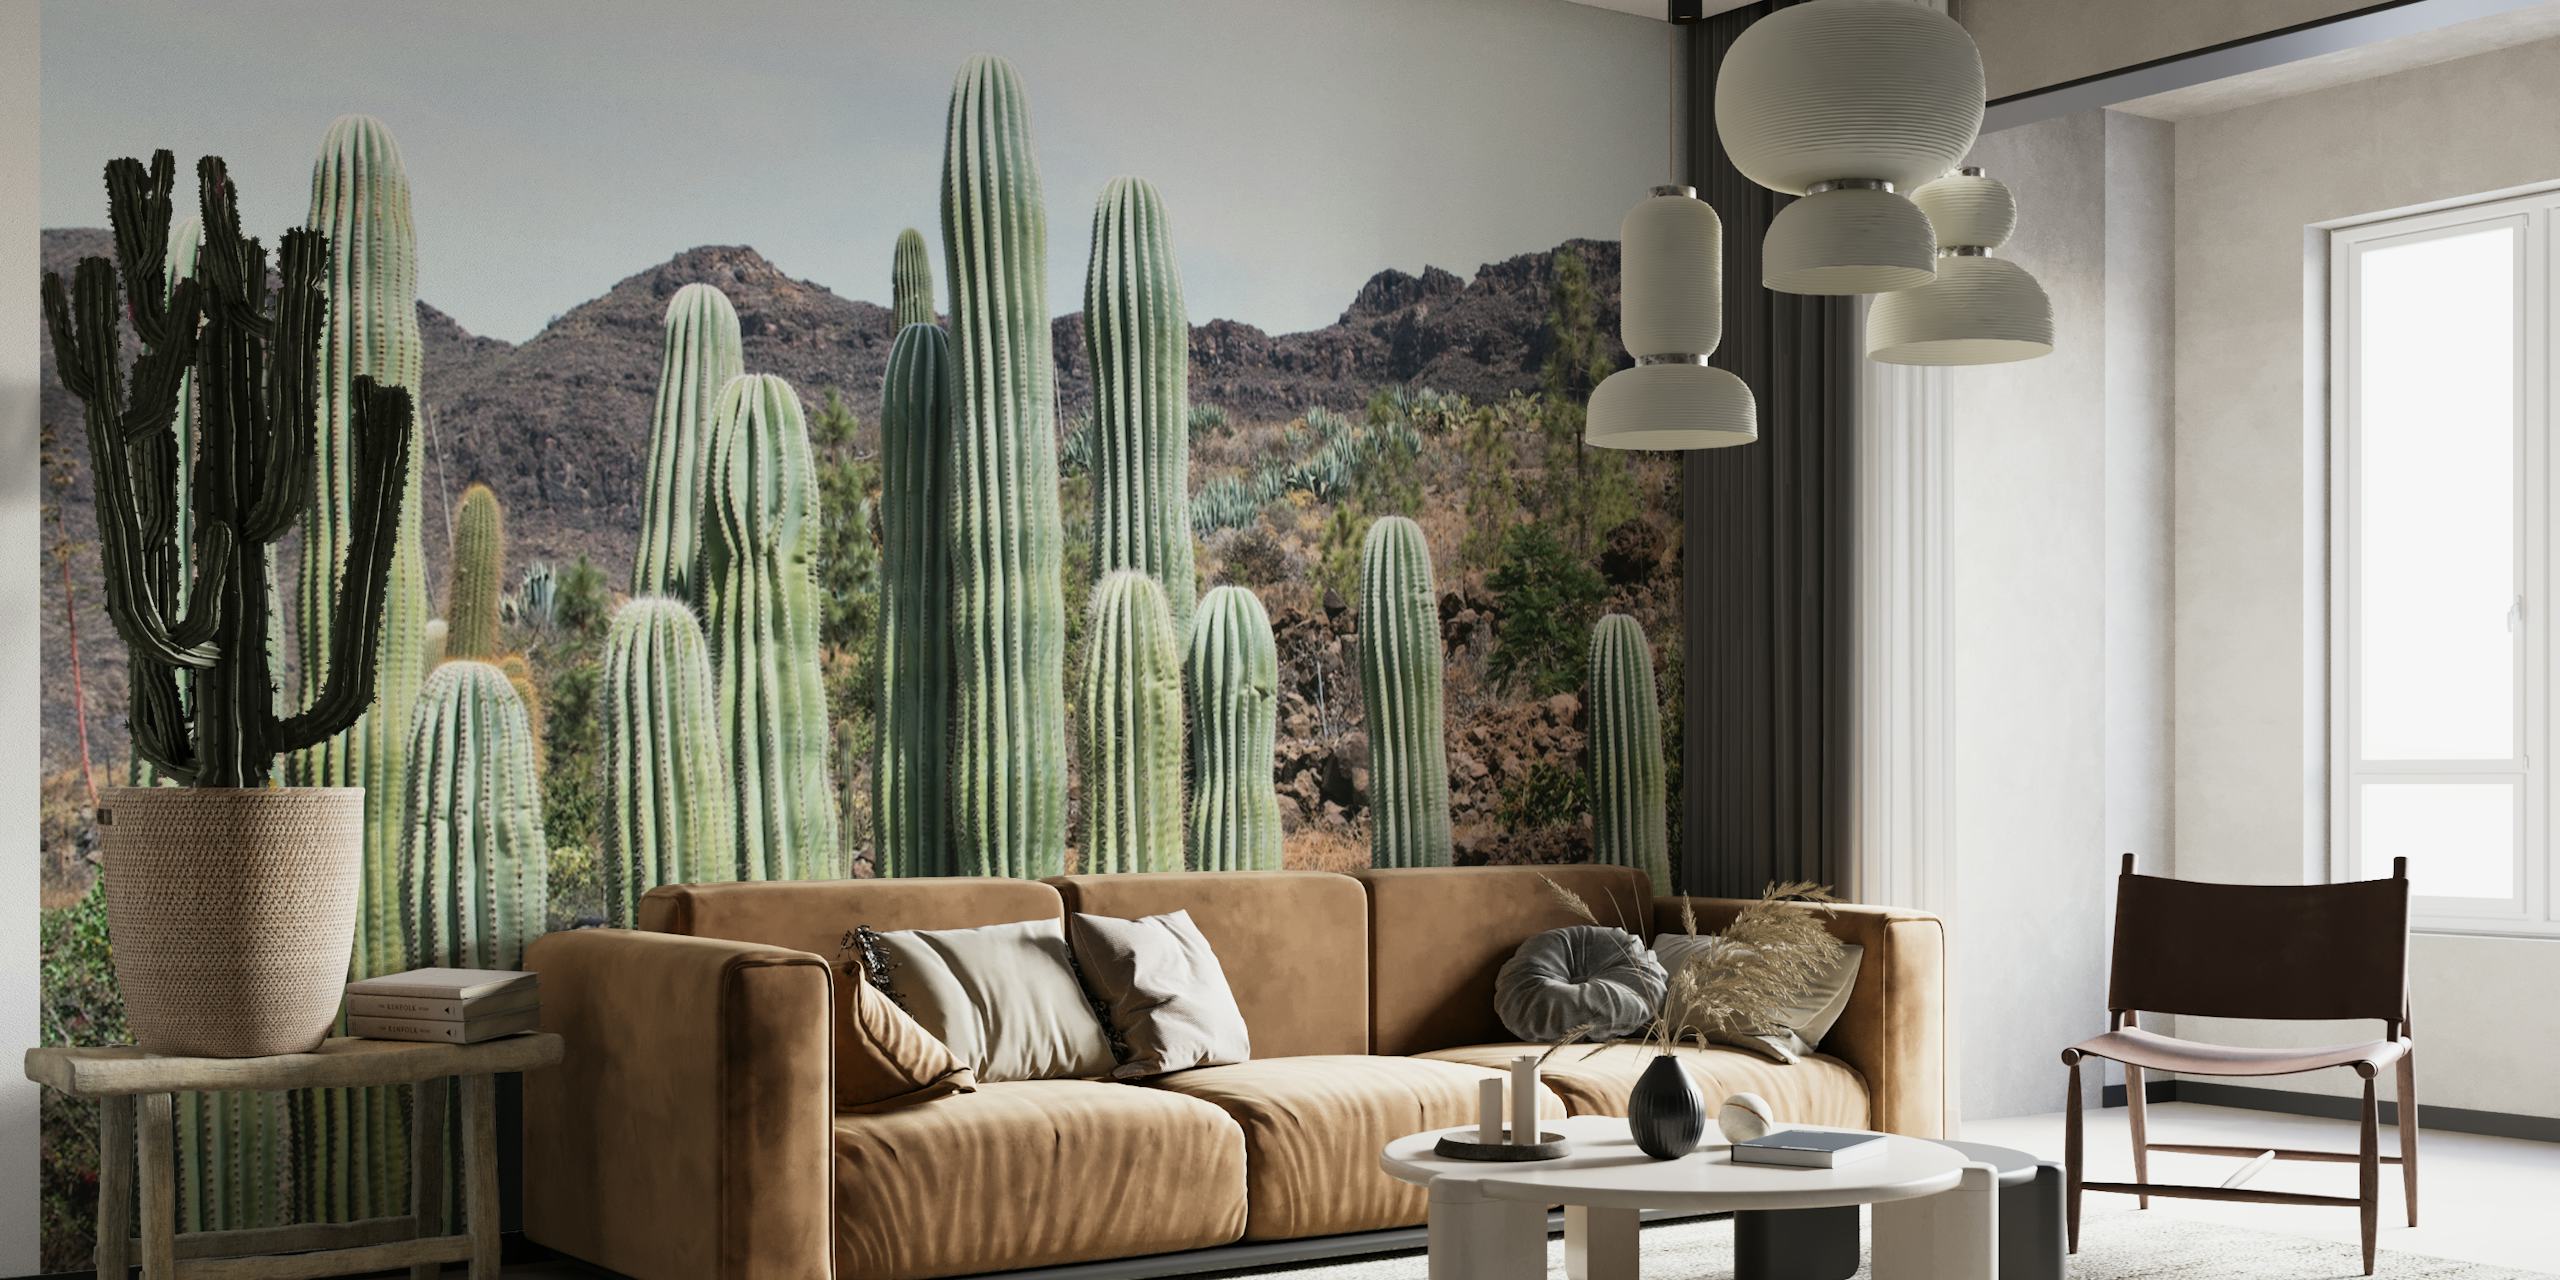 Fototapeta Cactus Oasis z wysokimi kaktusami i górami w tle